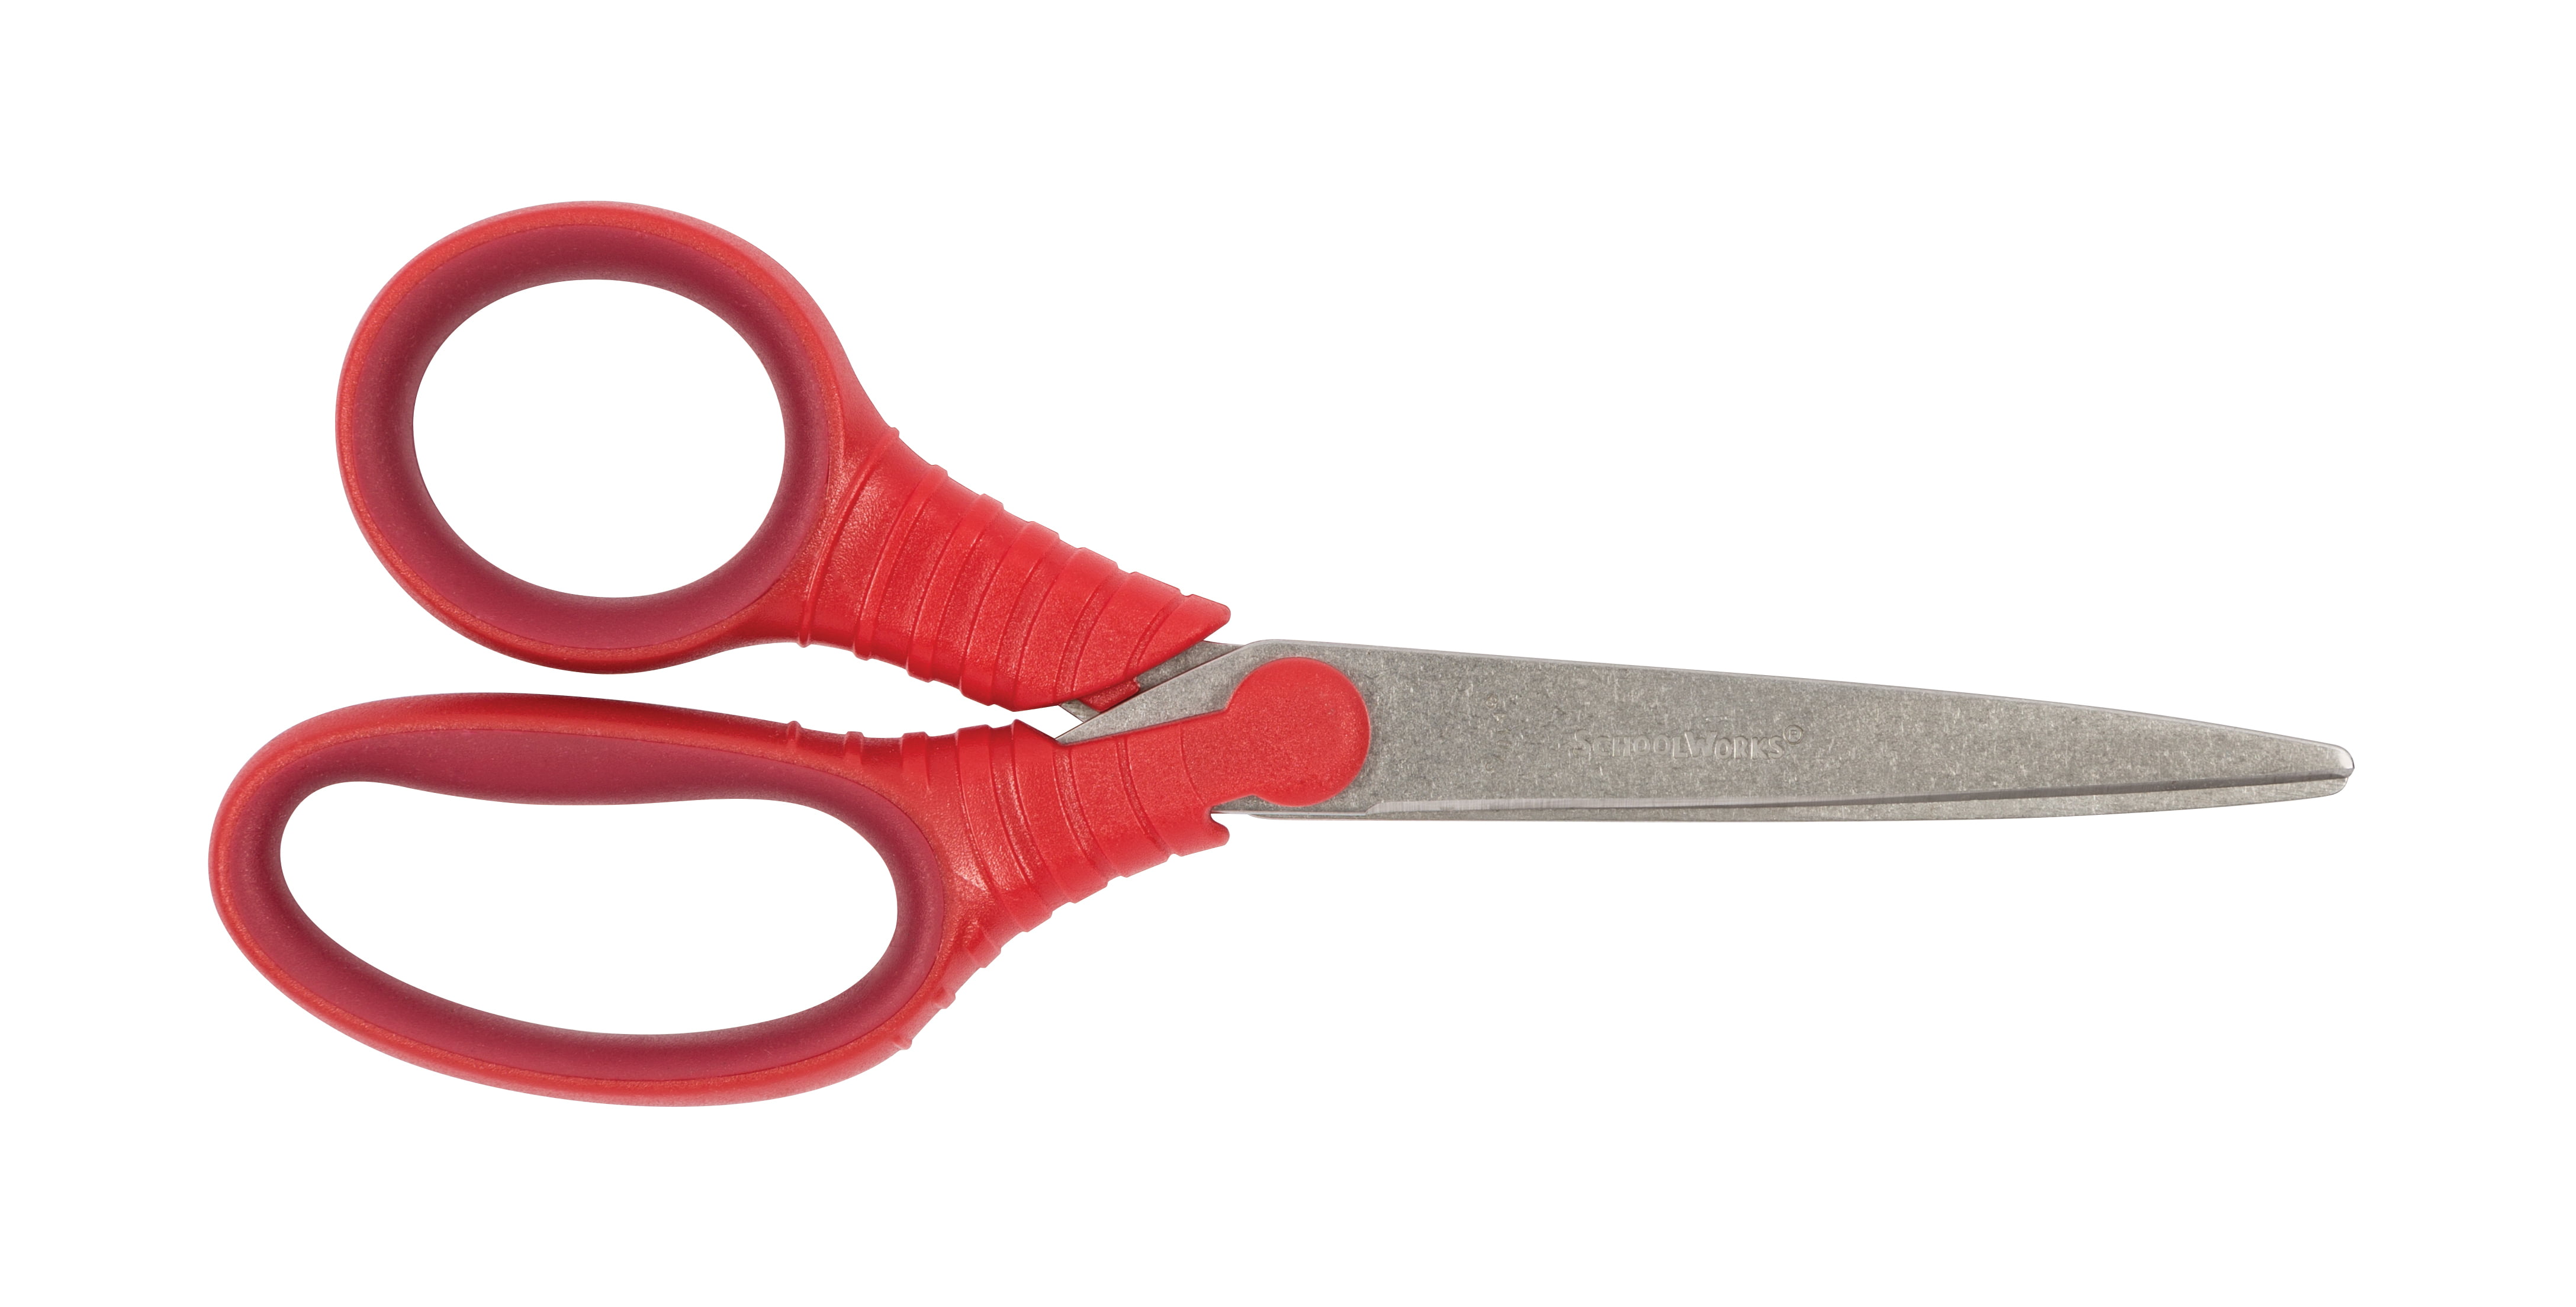 Kids scissors,Child scissors,scissors for school,Girls scissors,Safety  scissors suitable for kids ages 4-8,girl's gift,Color PURPLE